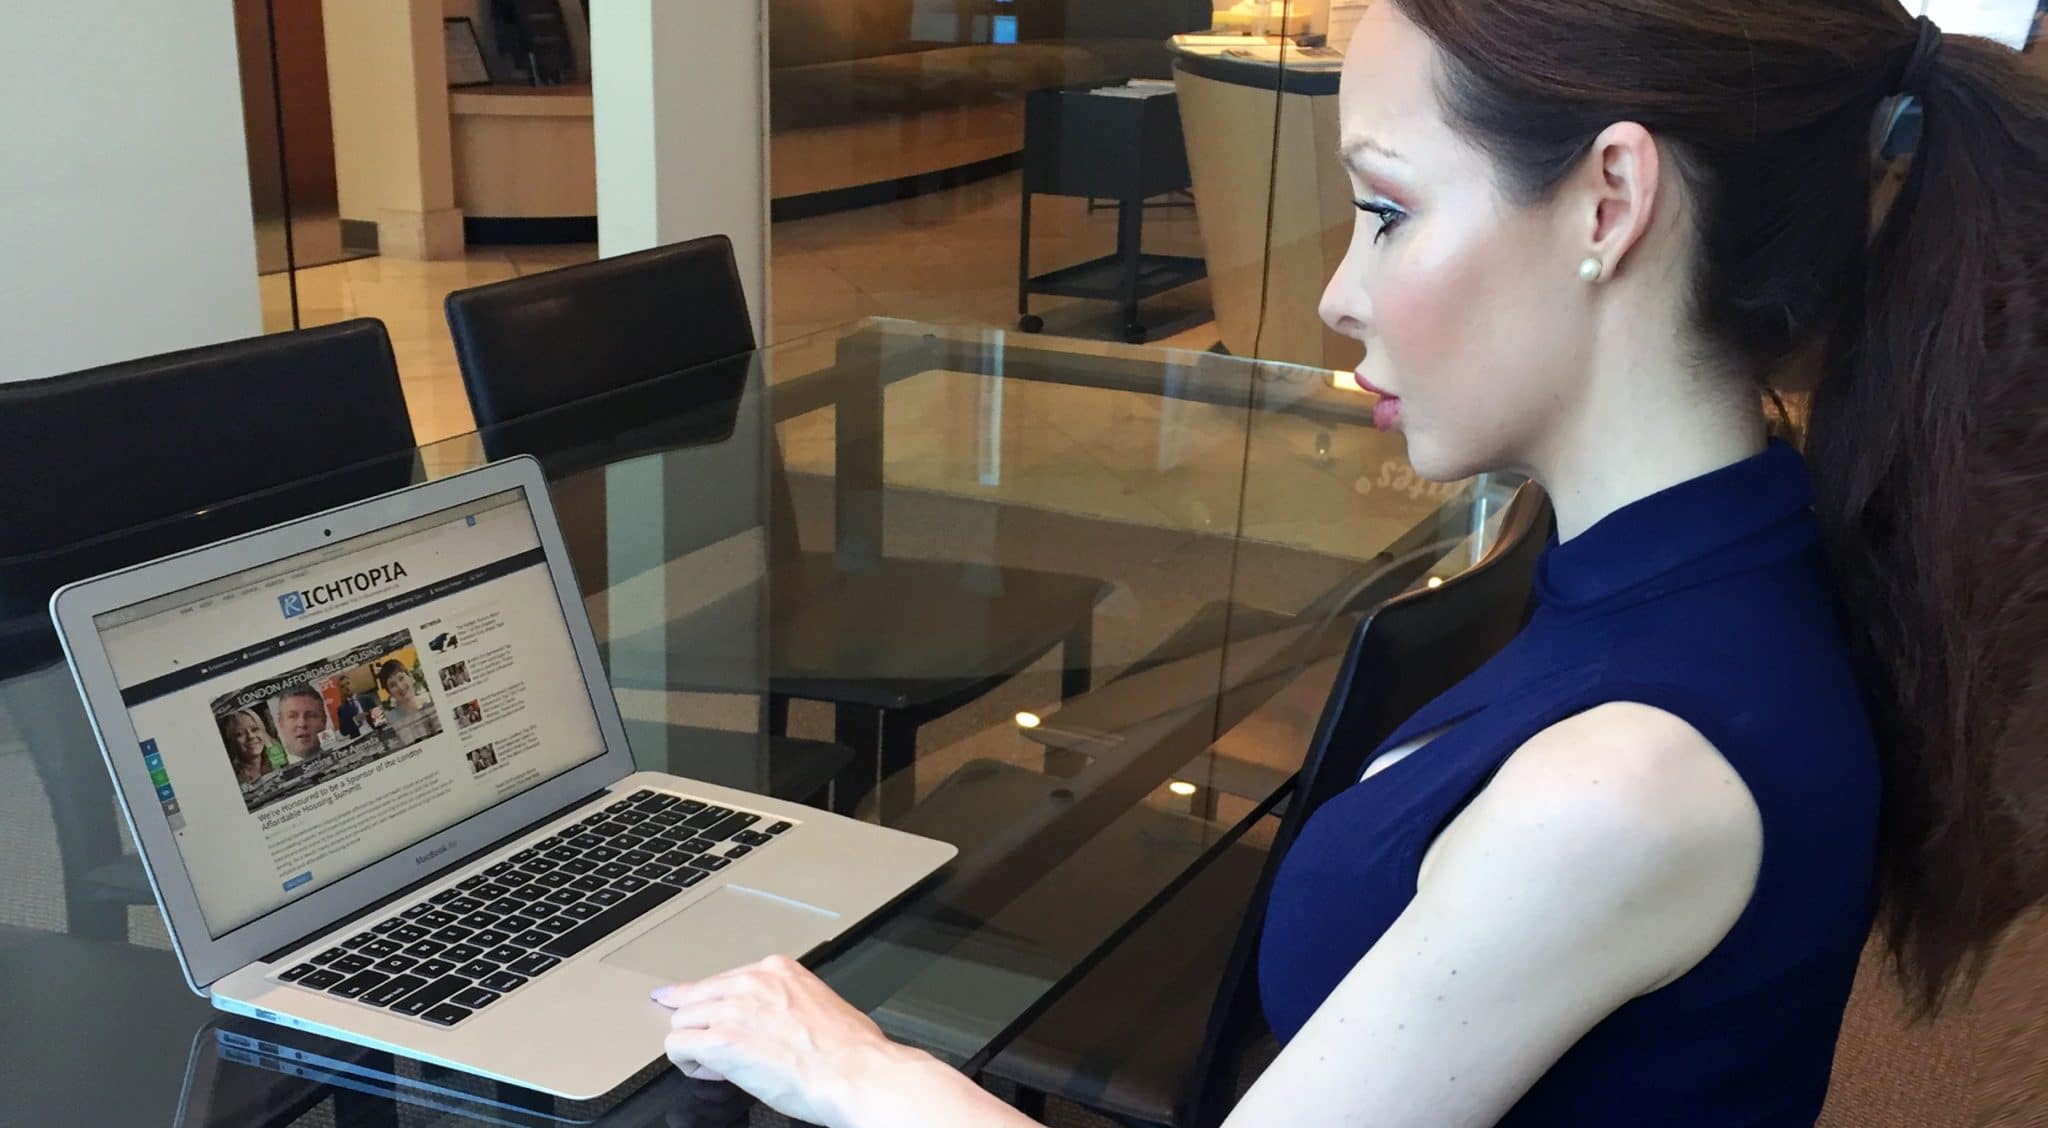 Picture of Lauren Davis reading Richtopia on a laptop.